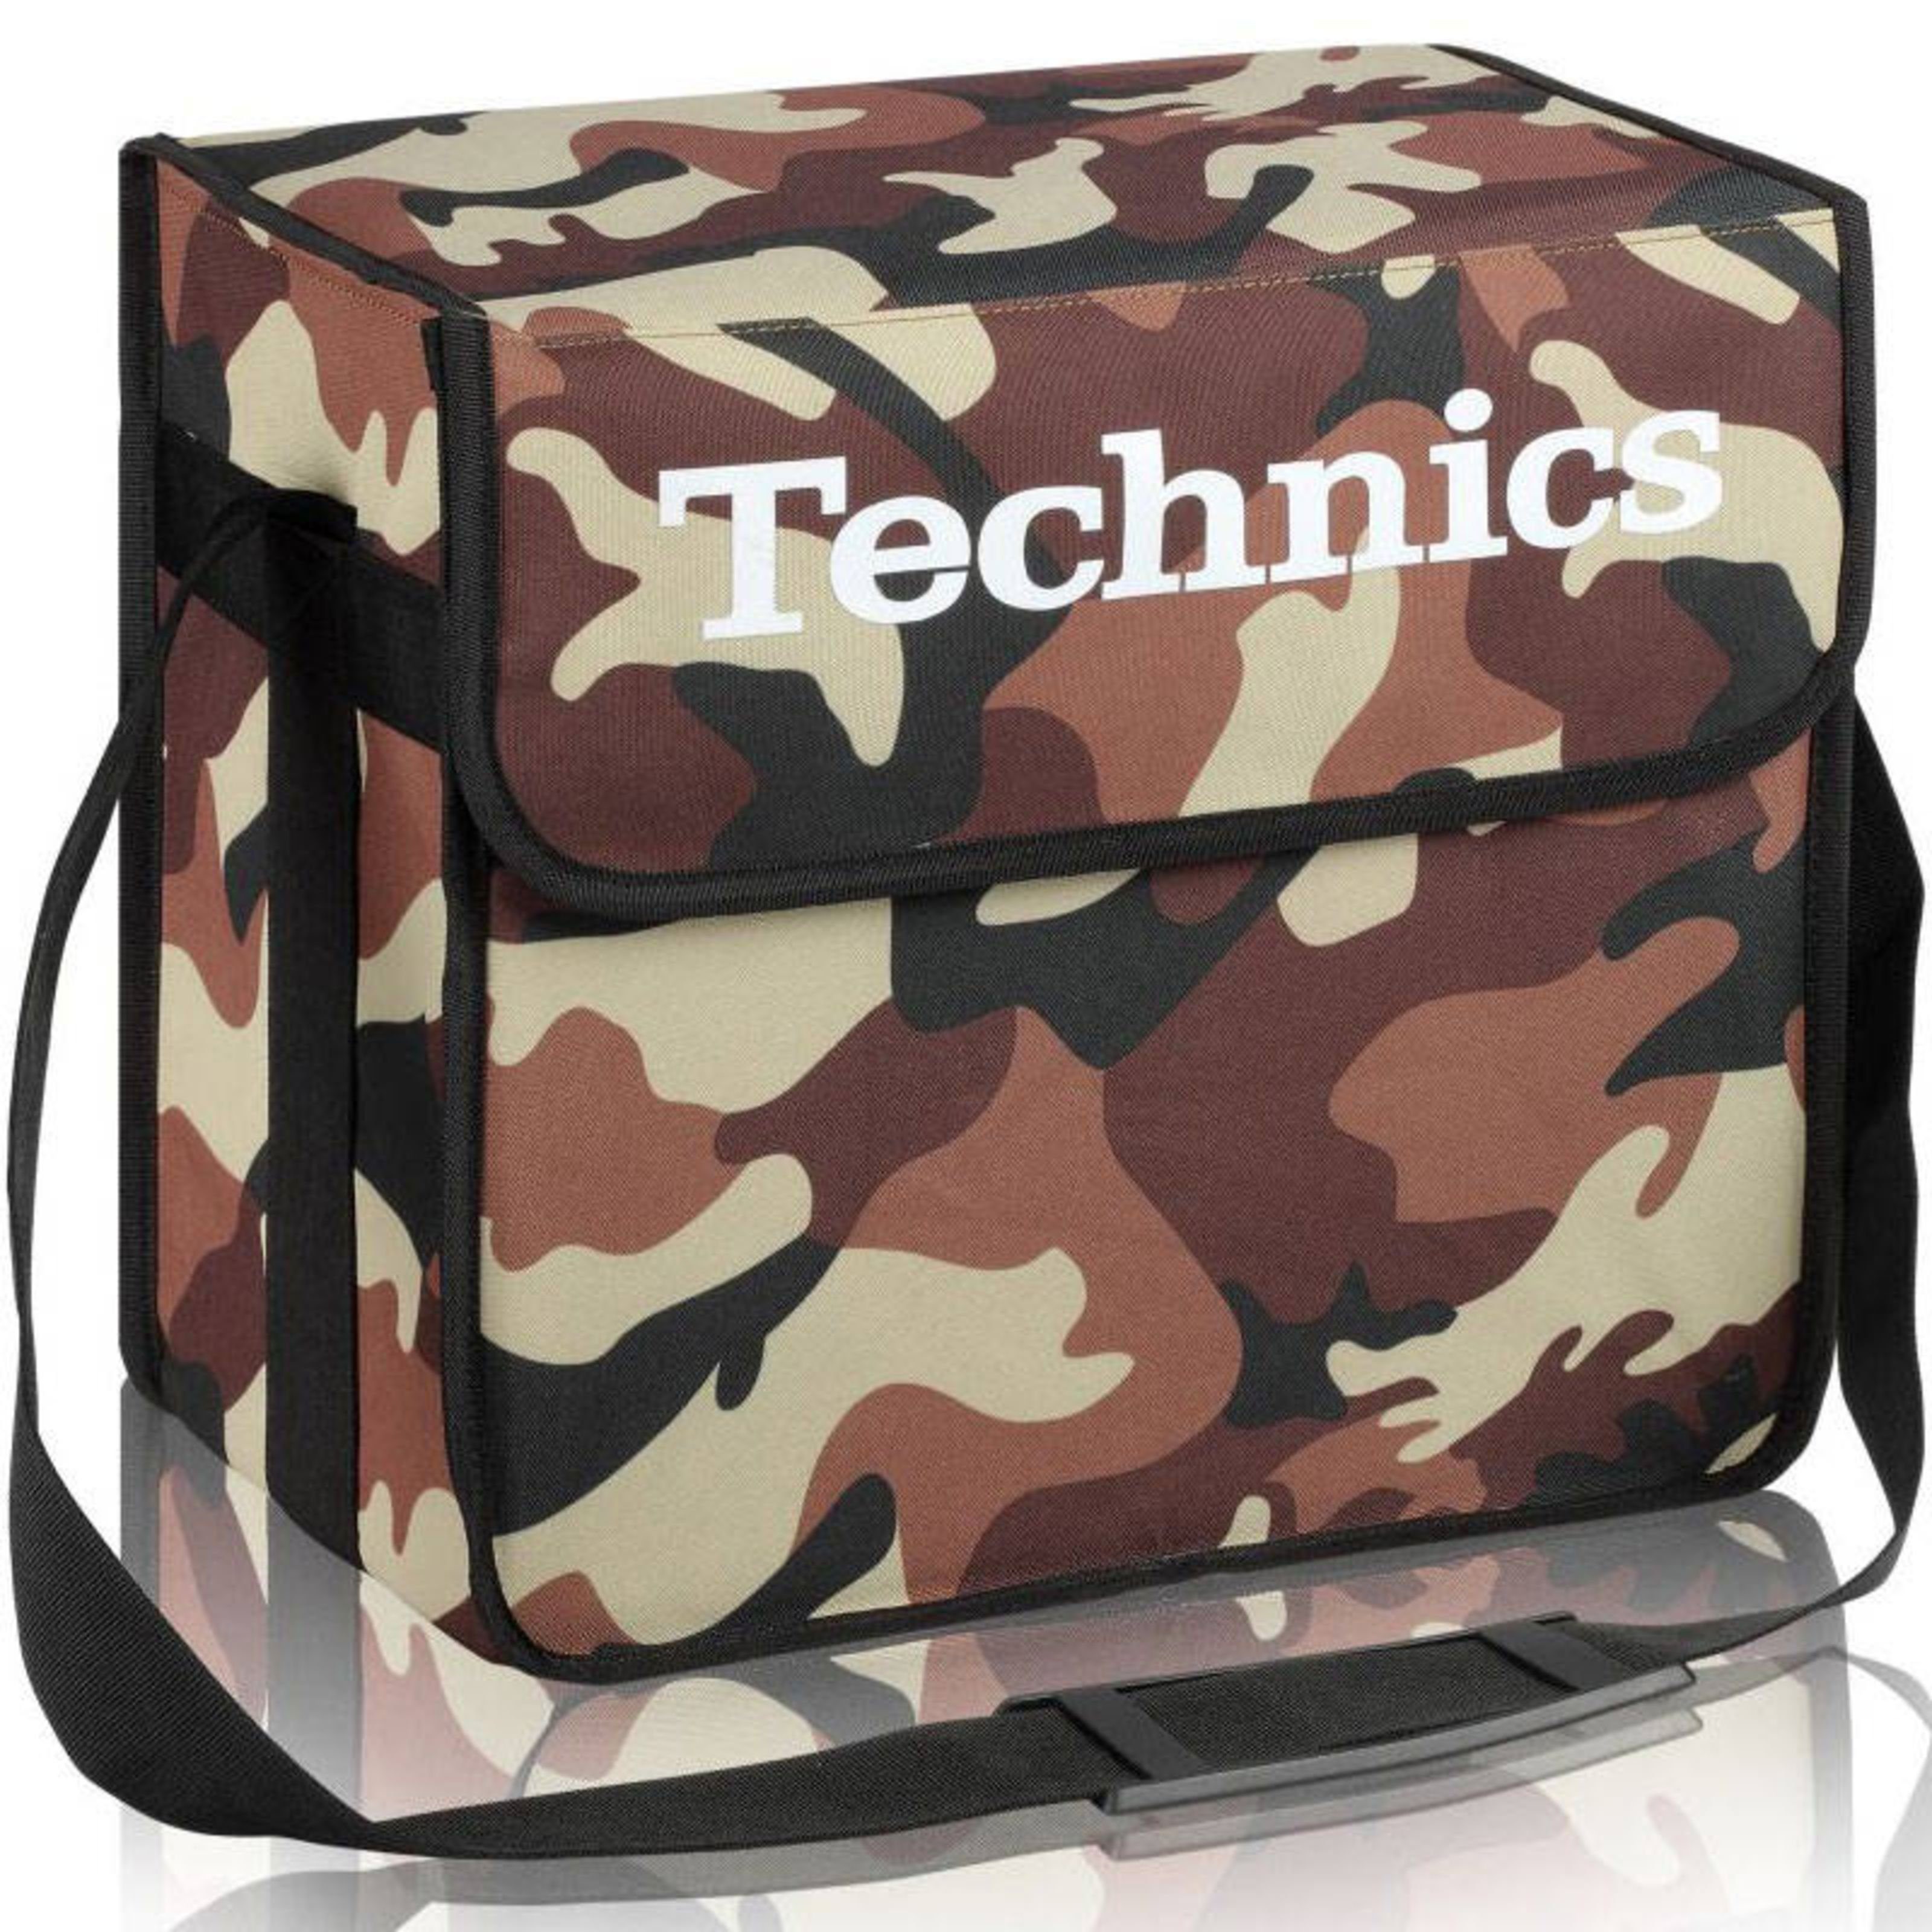 Zomo DVD-Hülle, Technics DJ-Bag camouflage braun - Vinyl Tasche